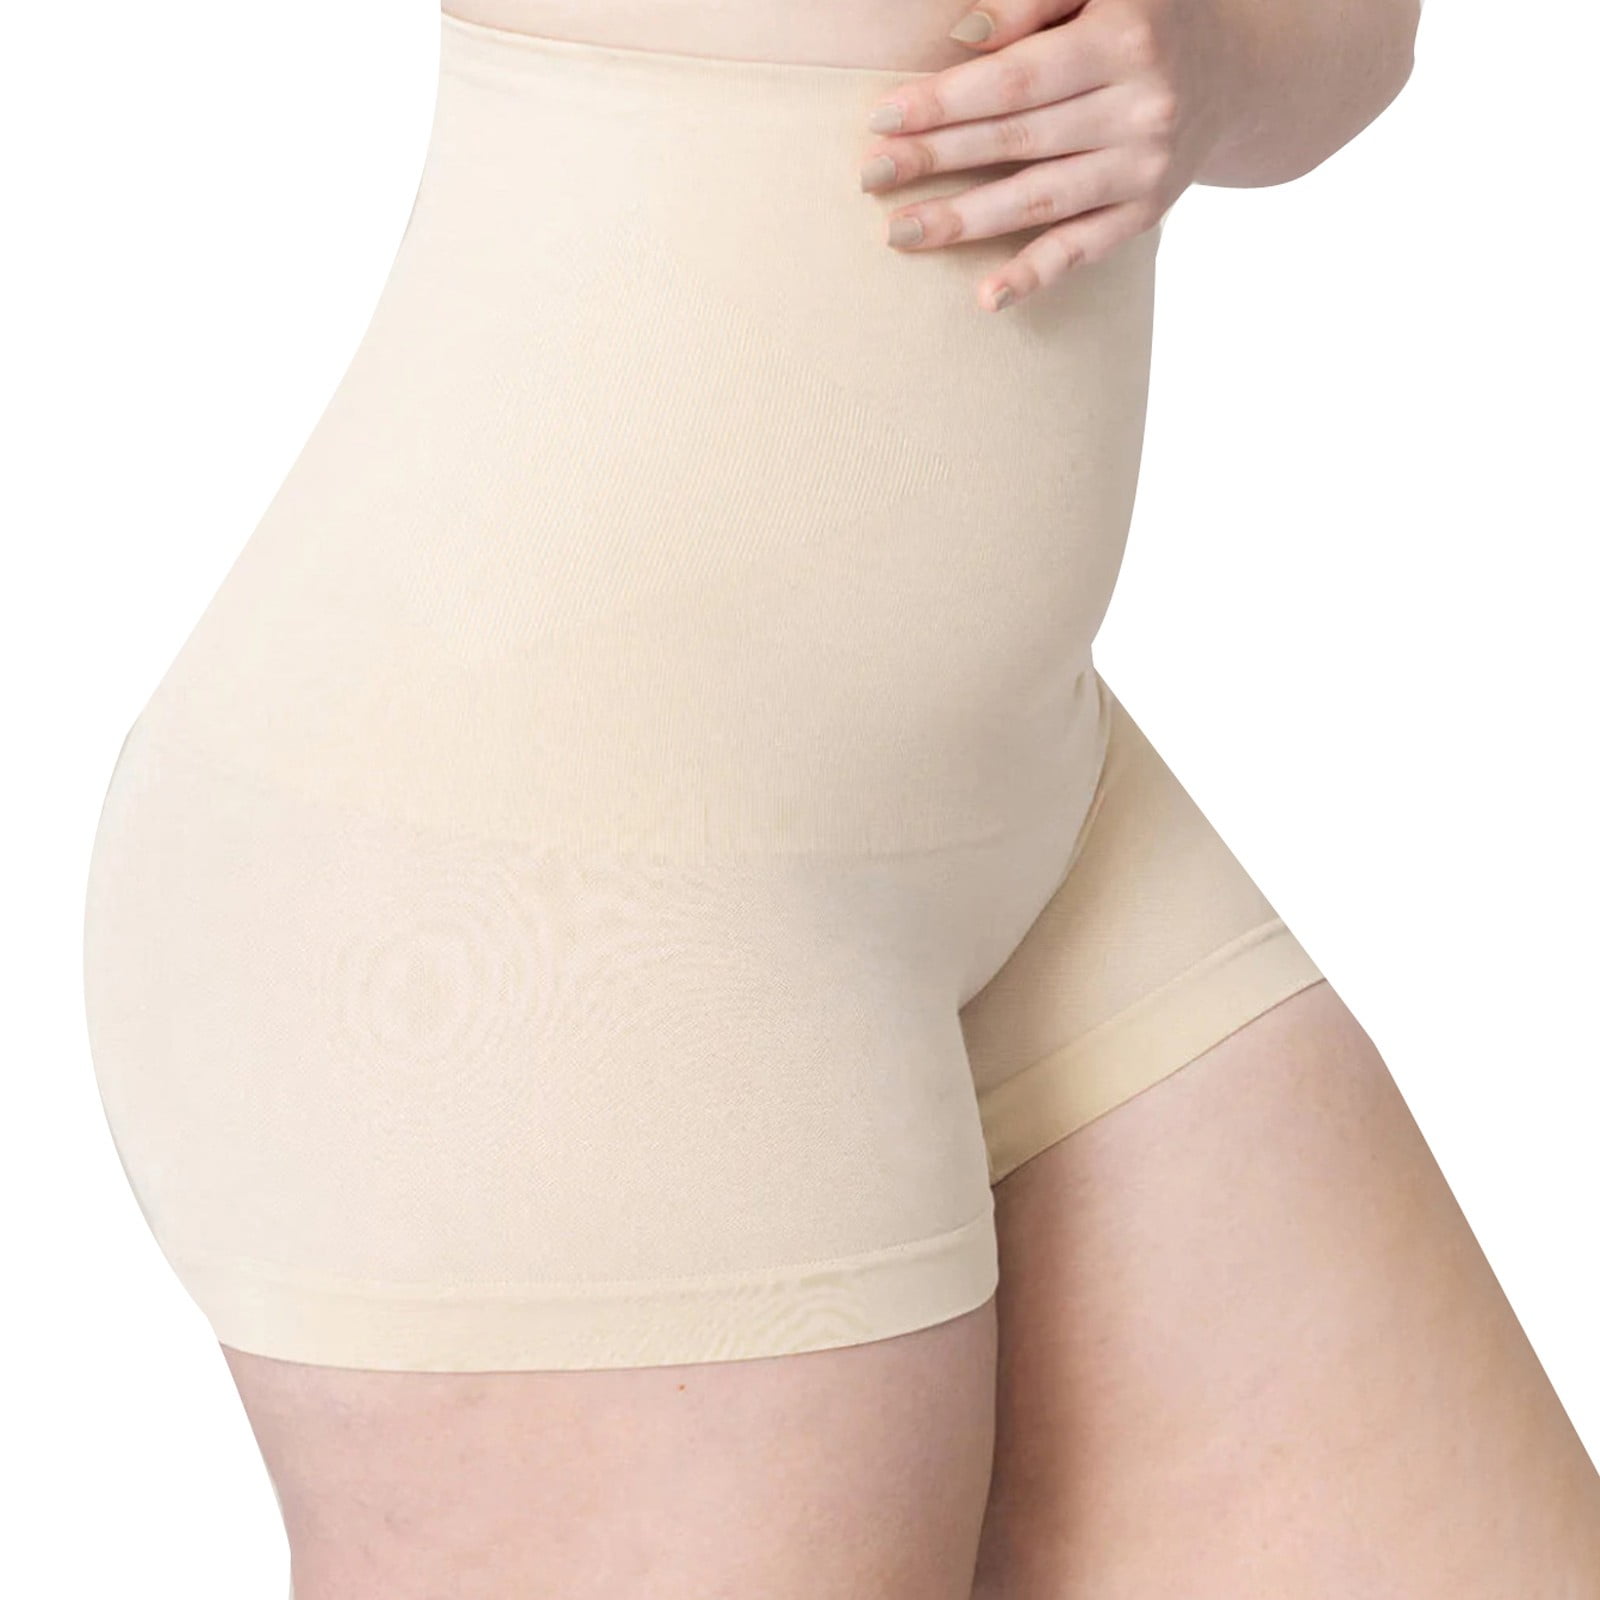 EHQJNJ Female Shapewear Tummy Control Body Suit with Bra Women